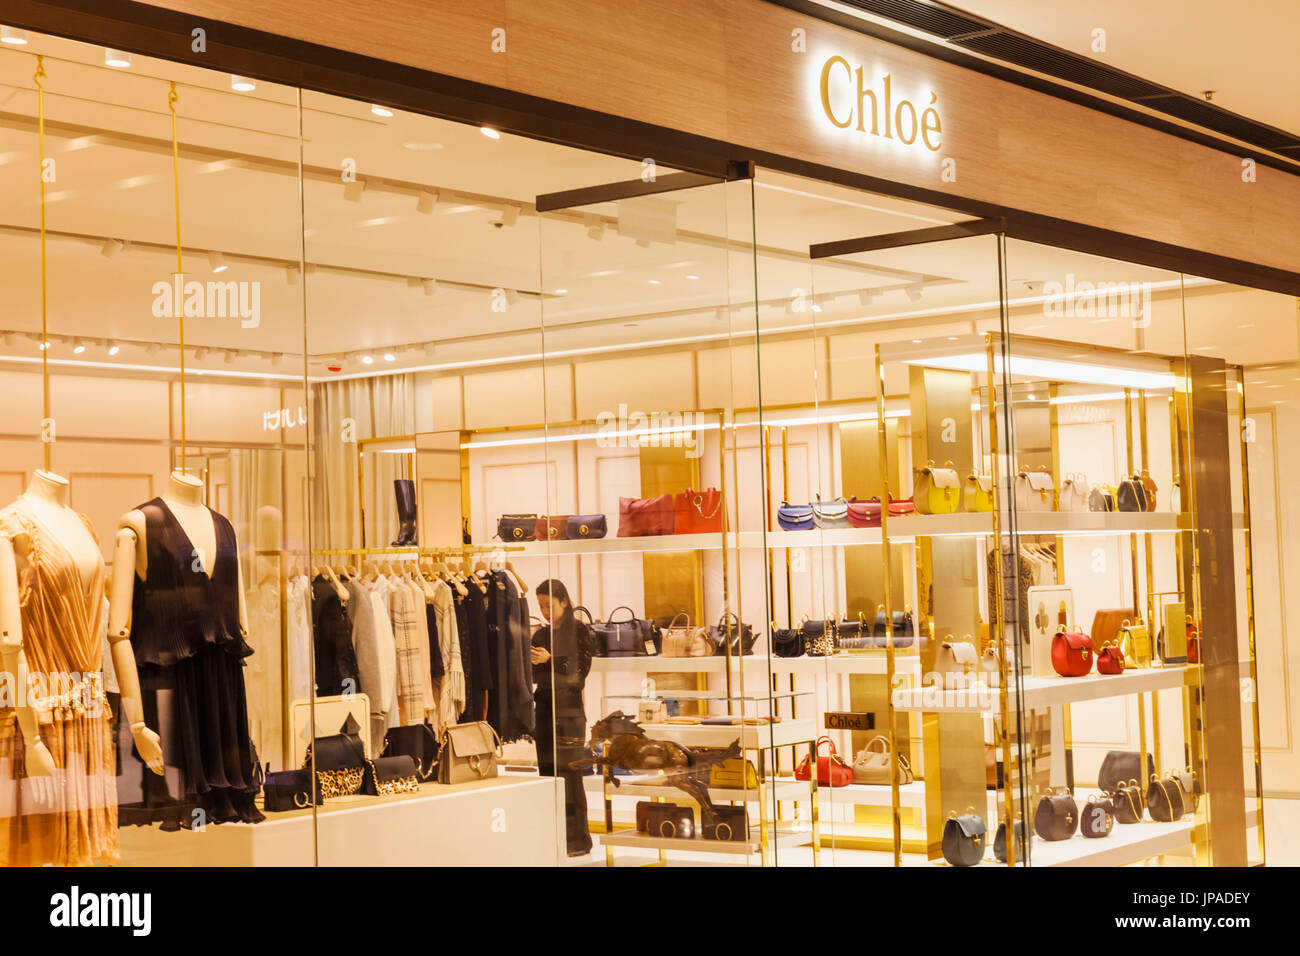 Cina, Hong Kong, centrale, IFC Shopping Mall, Chloe Store Foto Stock